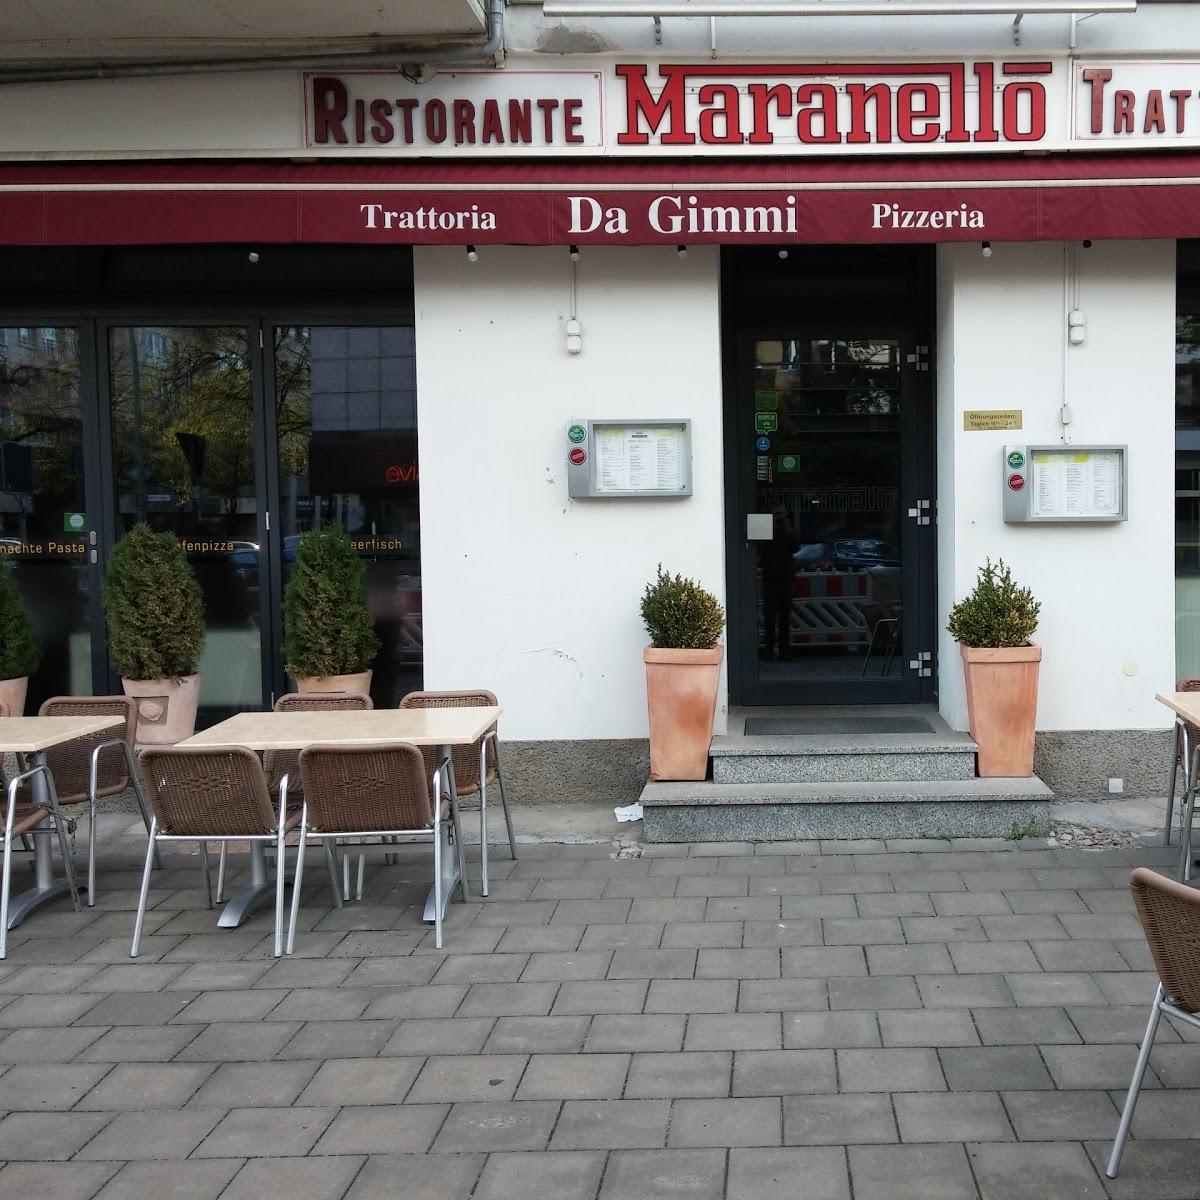 Restaurant "Maranello" in Berlin